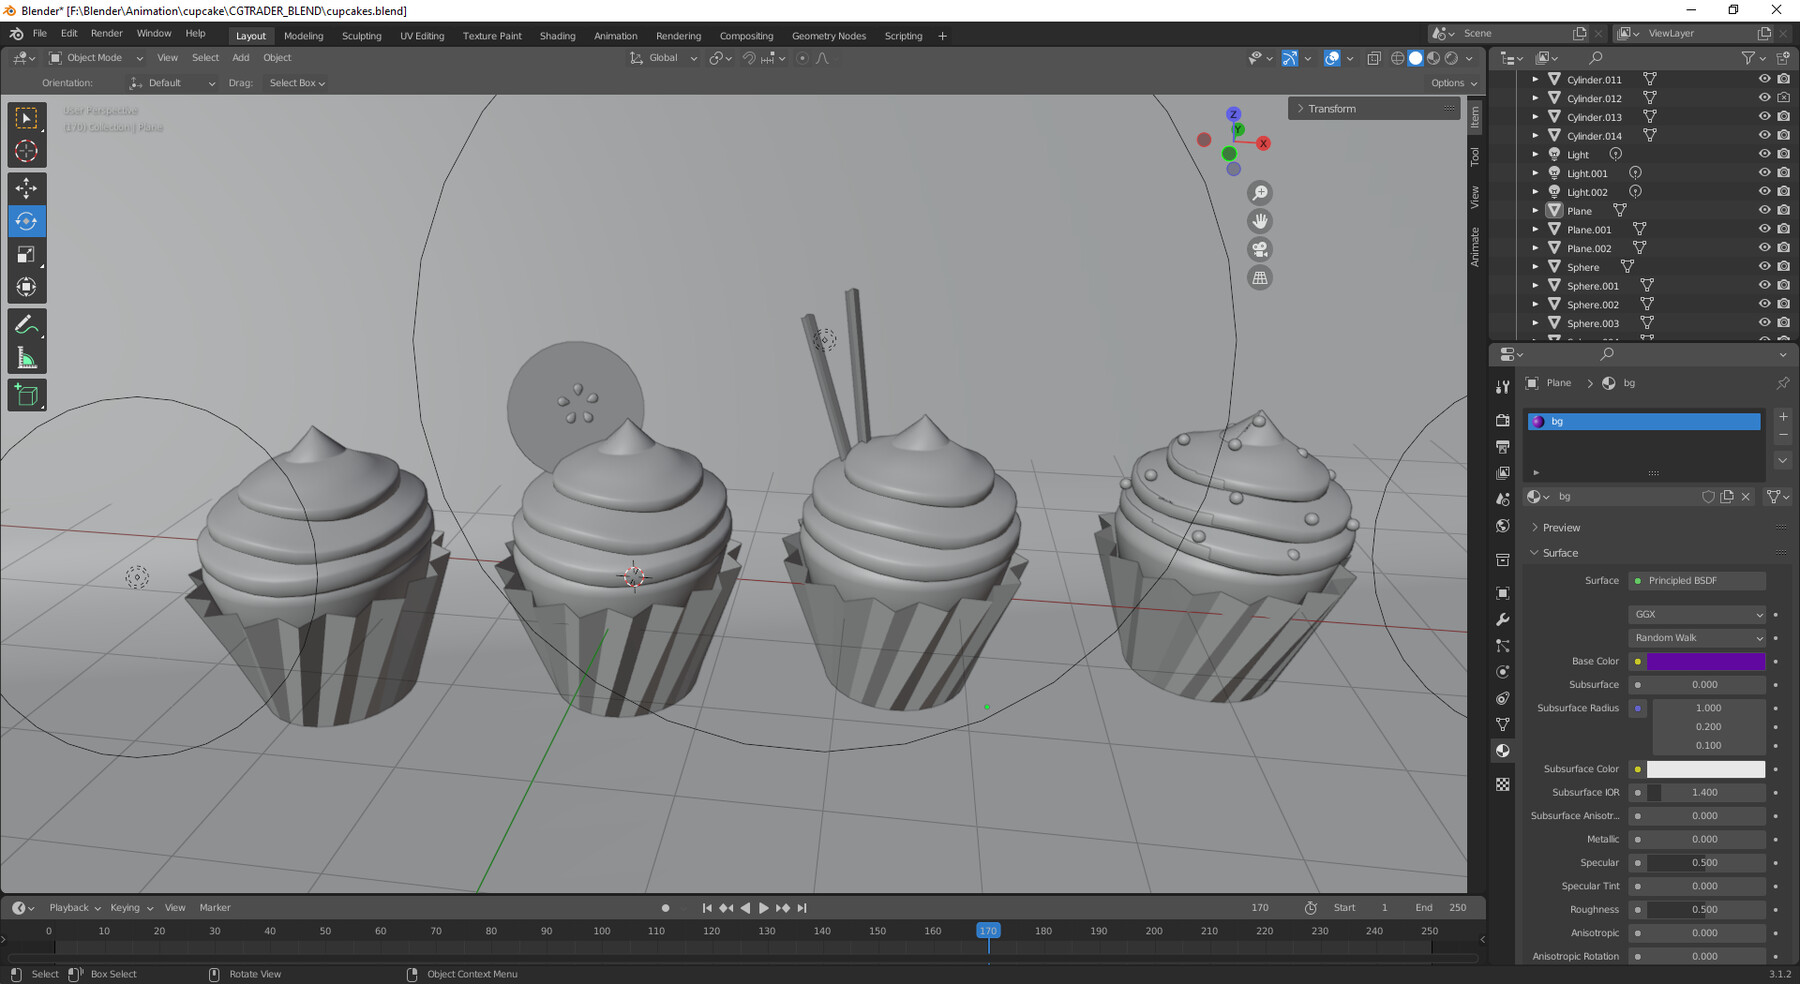 ice cream building effect geometry nodes blender 3D model animated